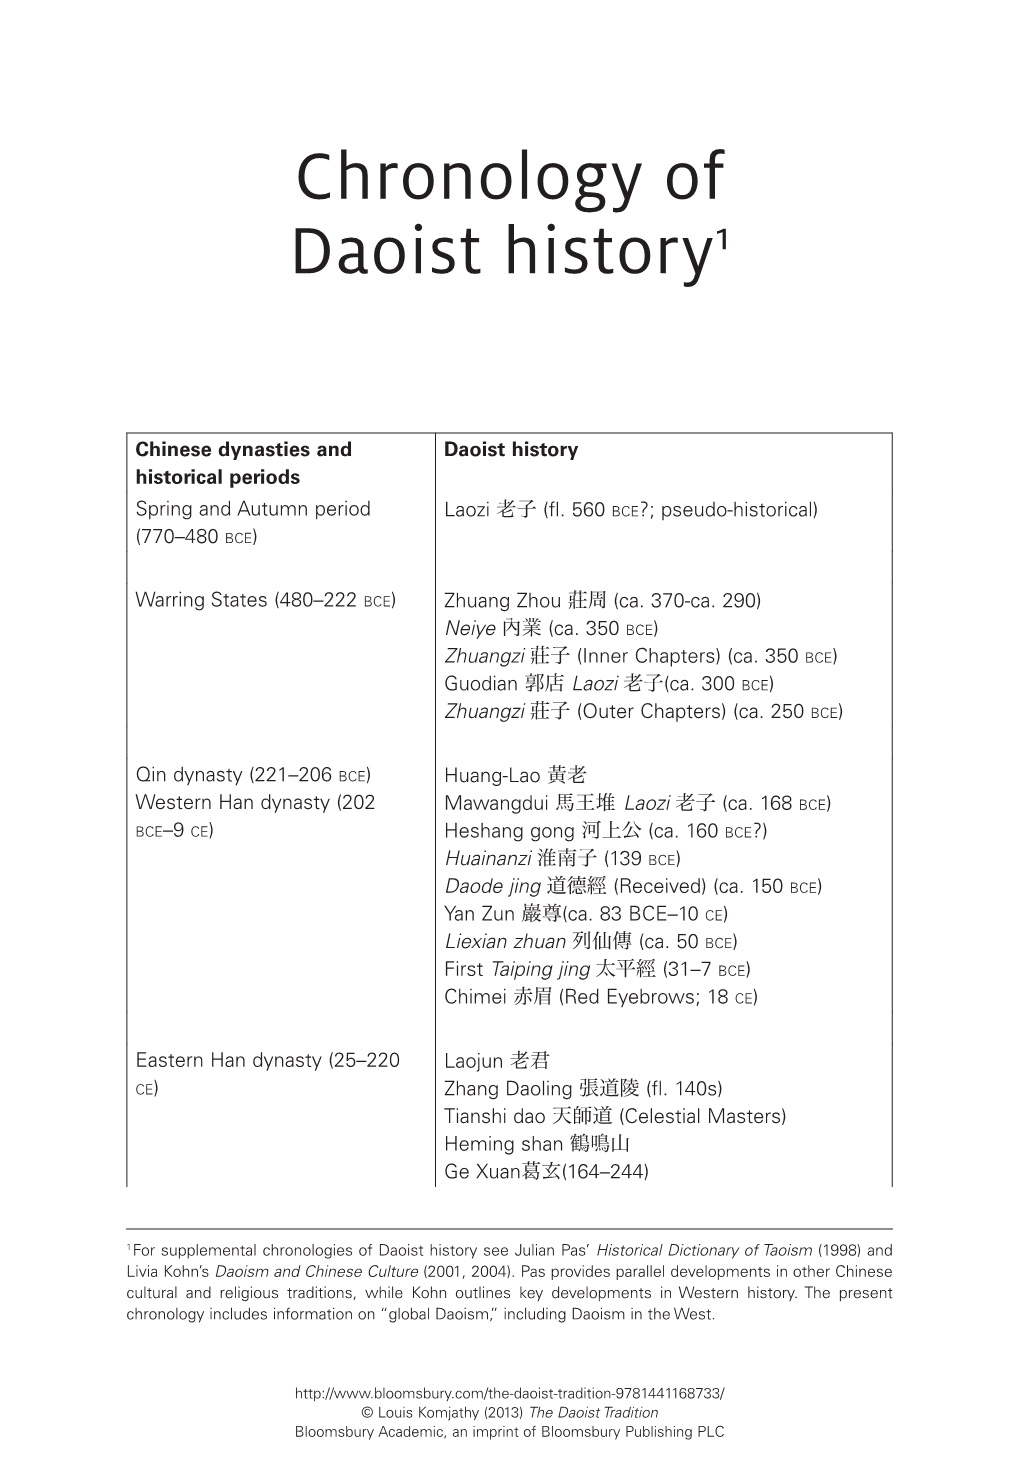 Chronology of Daoist History1